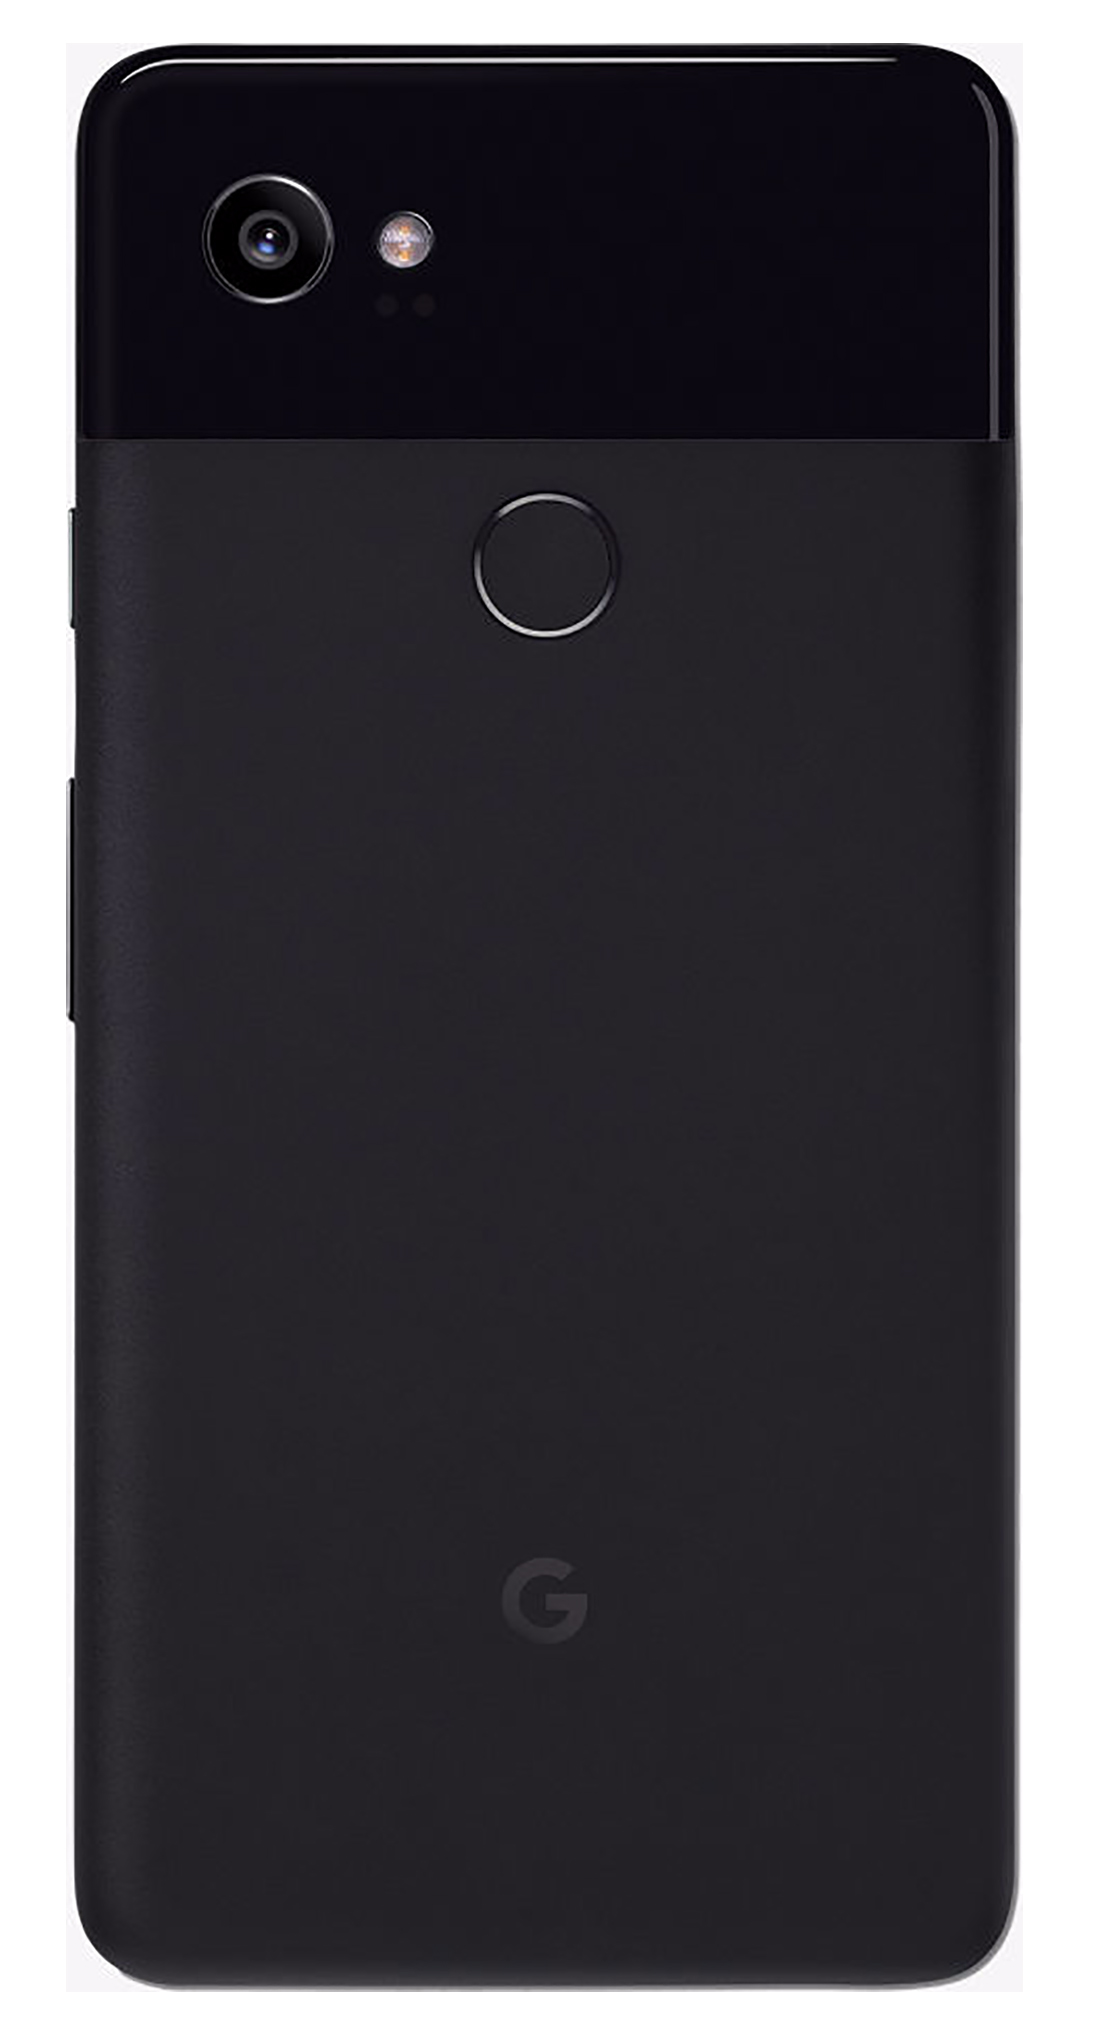 Google Pixel 2 XL 64GB Unlocked GSM/CDMA 4G LTE Octa-Core Phone w/ 12.2MP Camera - Just Black - image 2 of 4